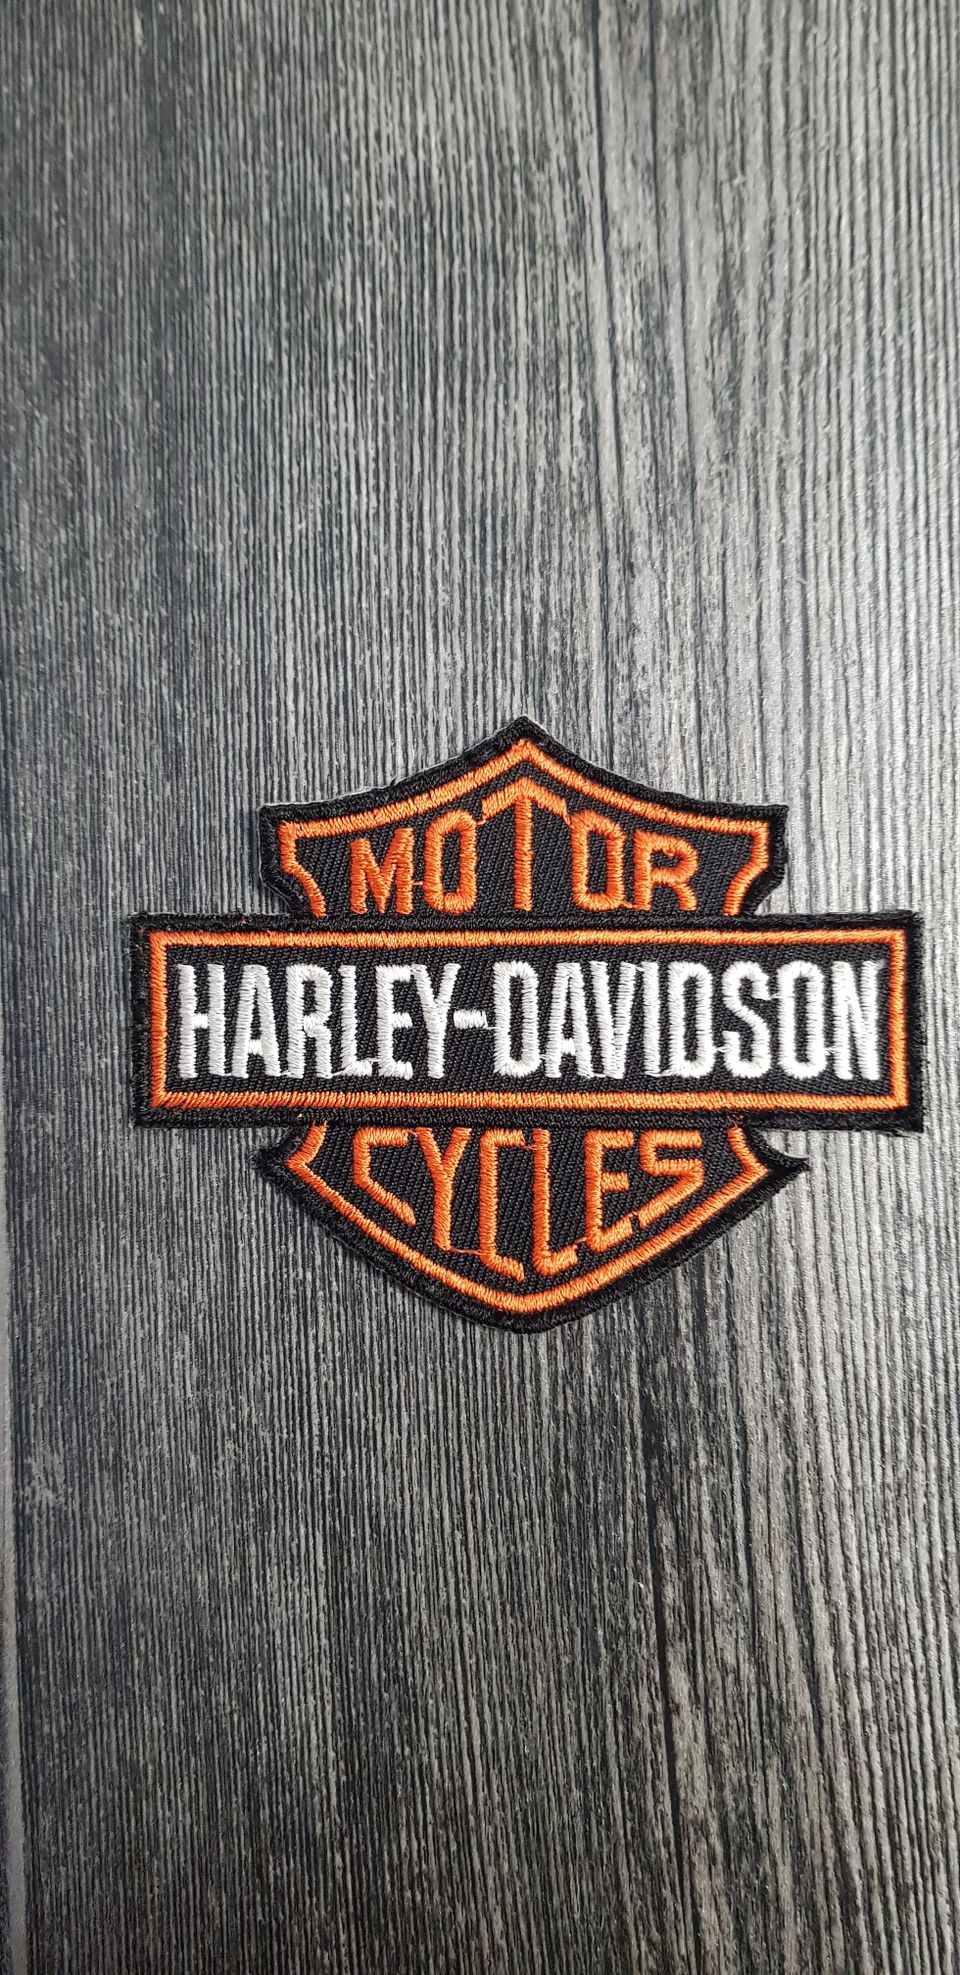 Harley Davidson merkki